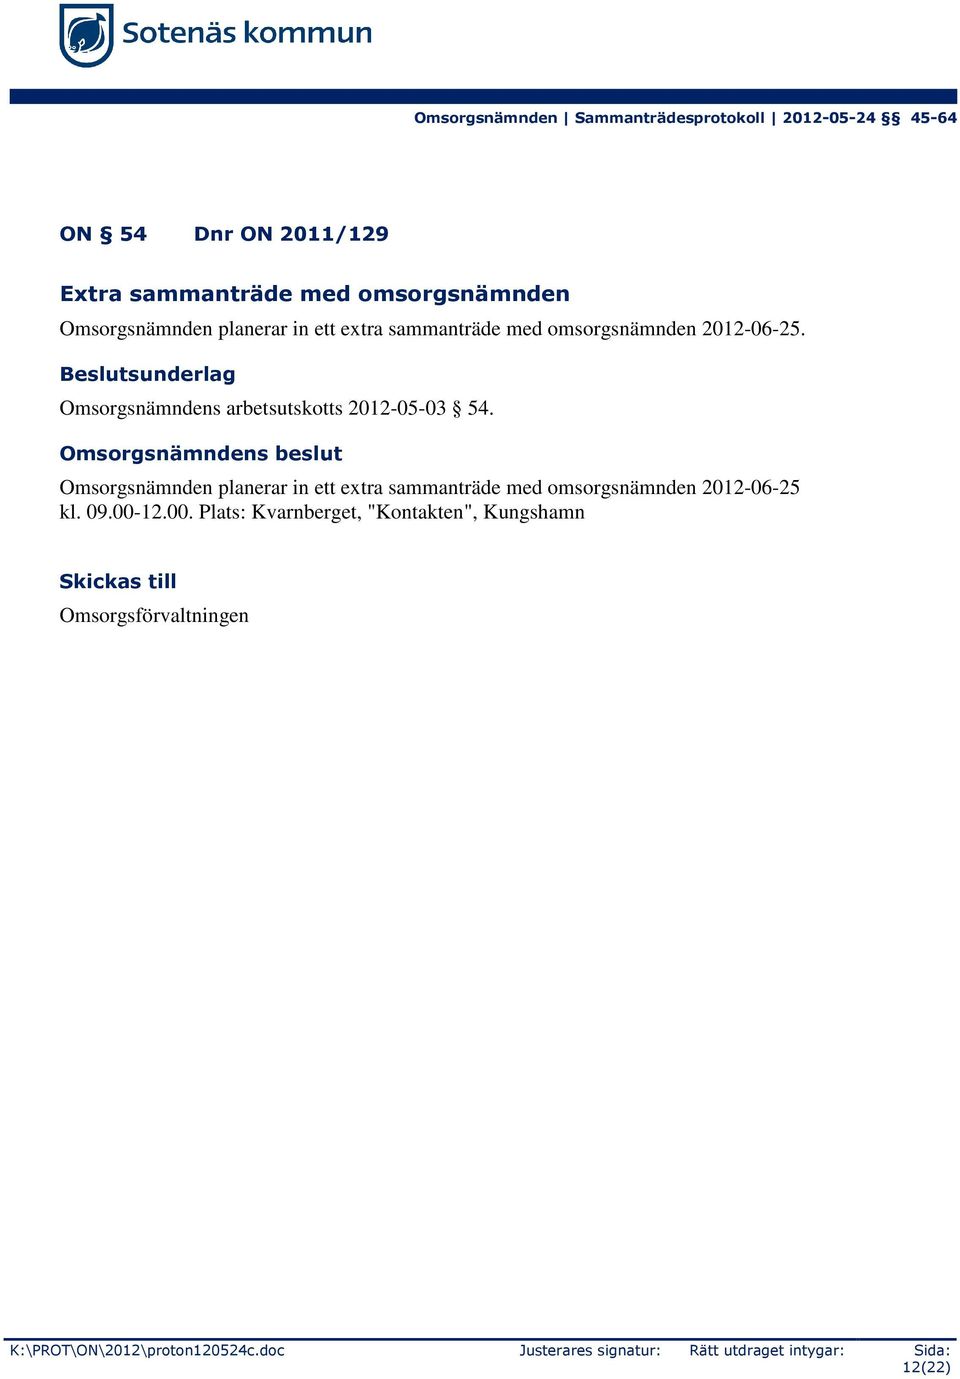 Beslutsunderlag Omsorgsnämndens arbetsutskotts 2012-05-03 54.